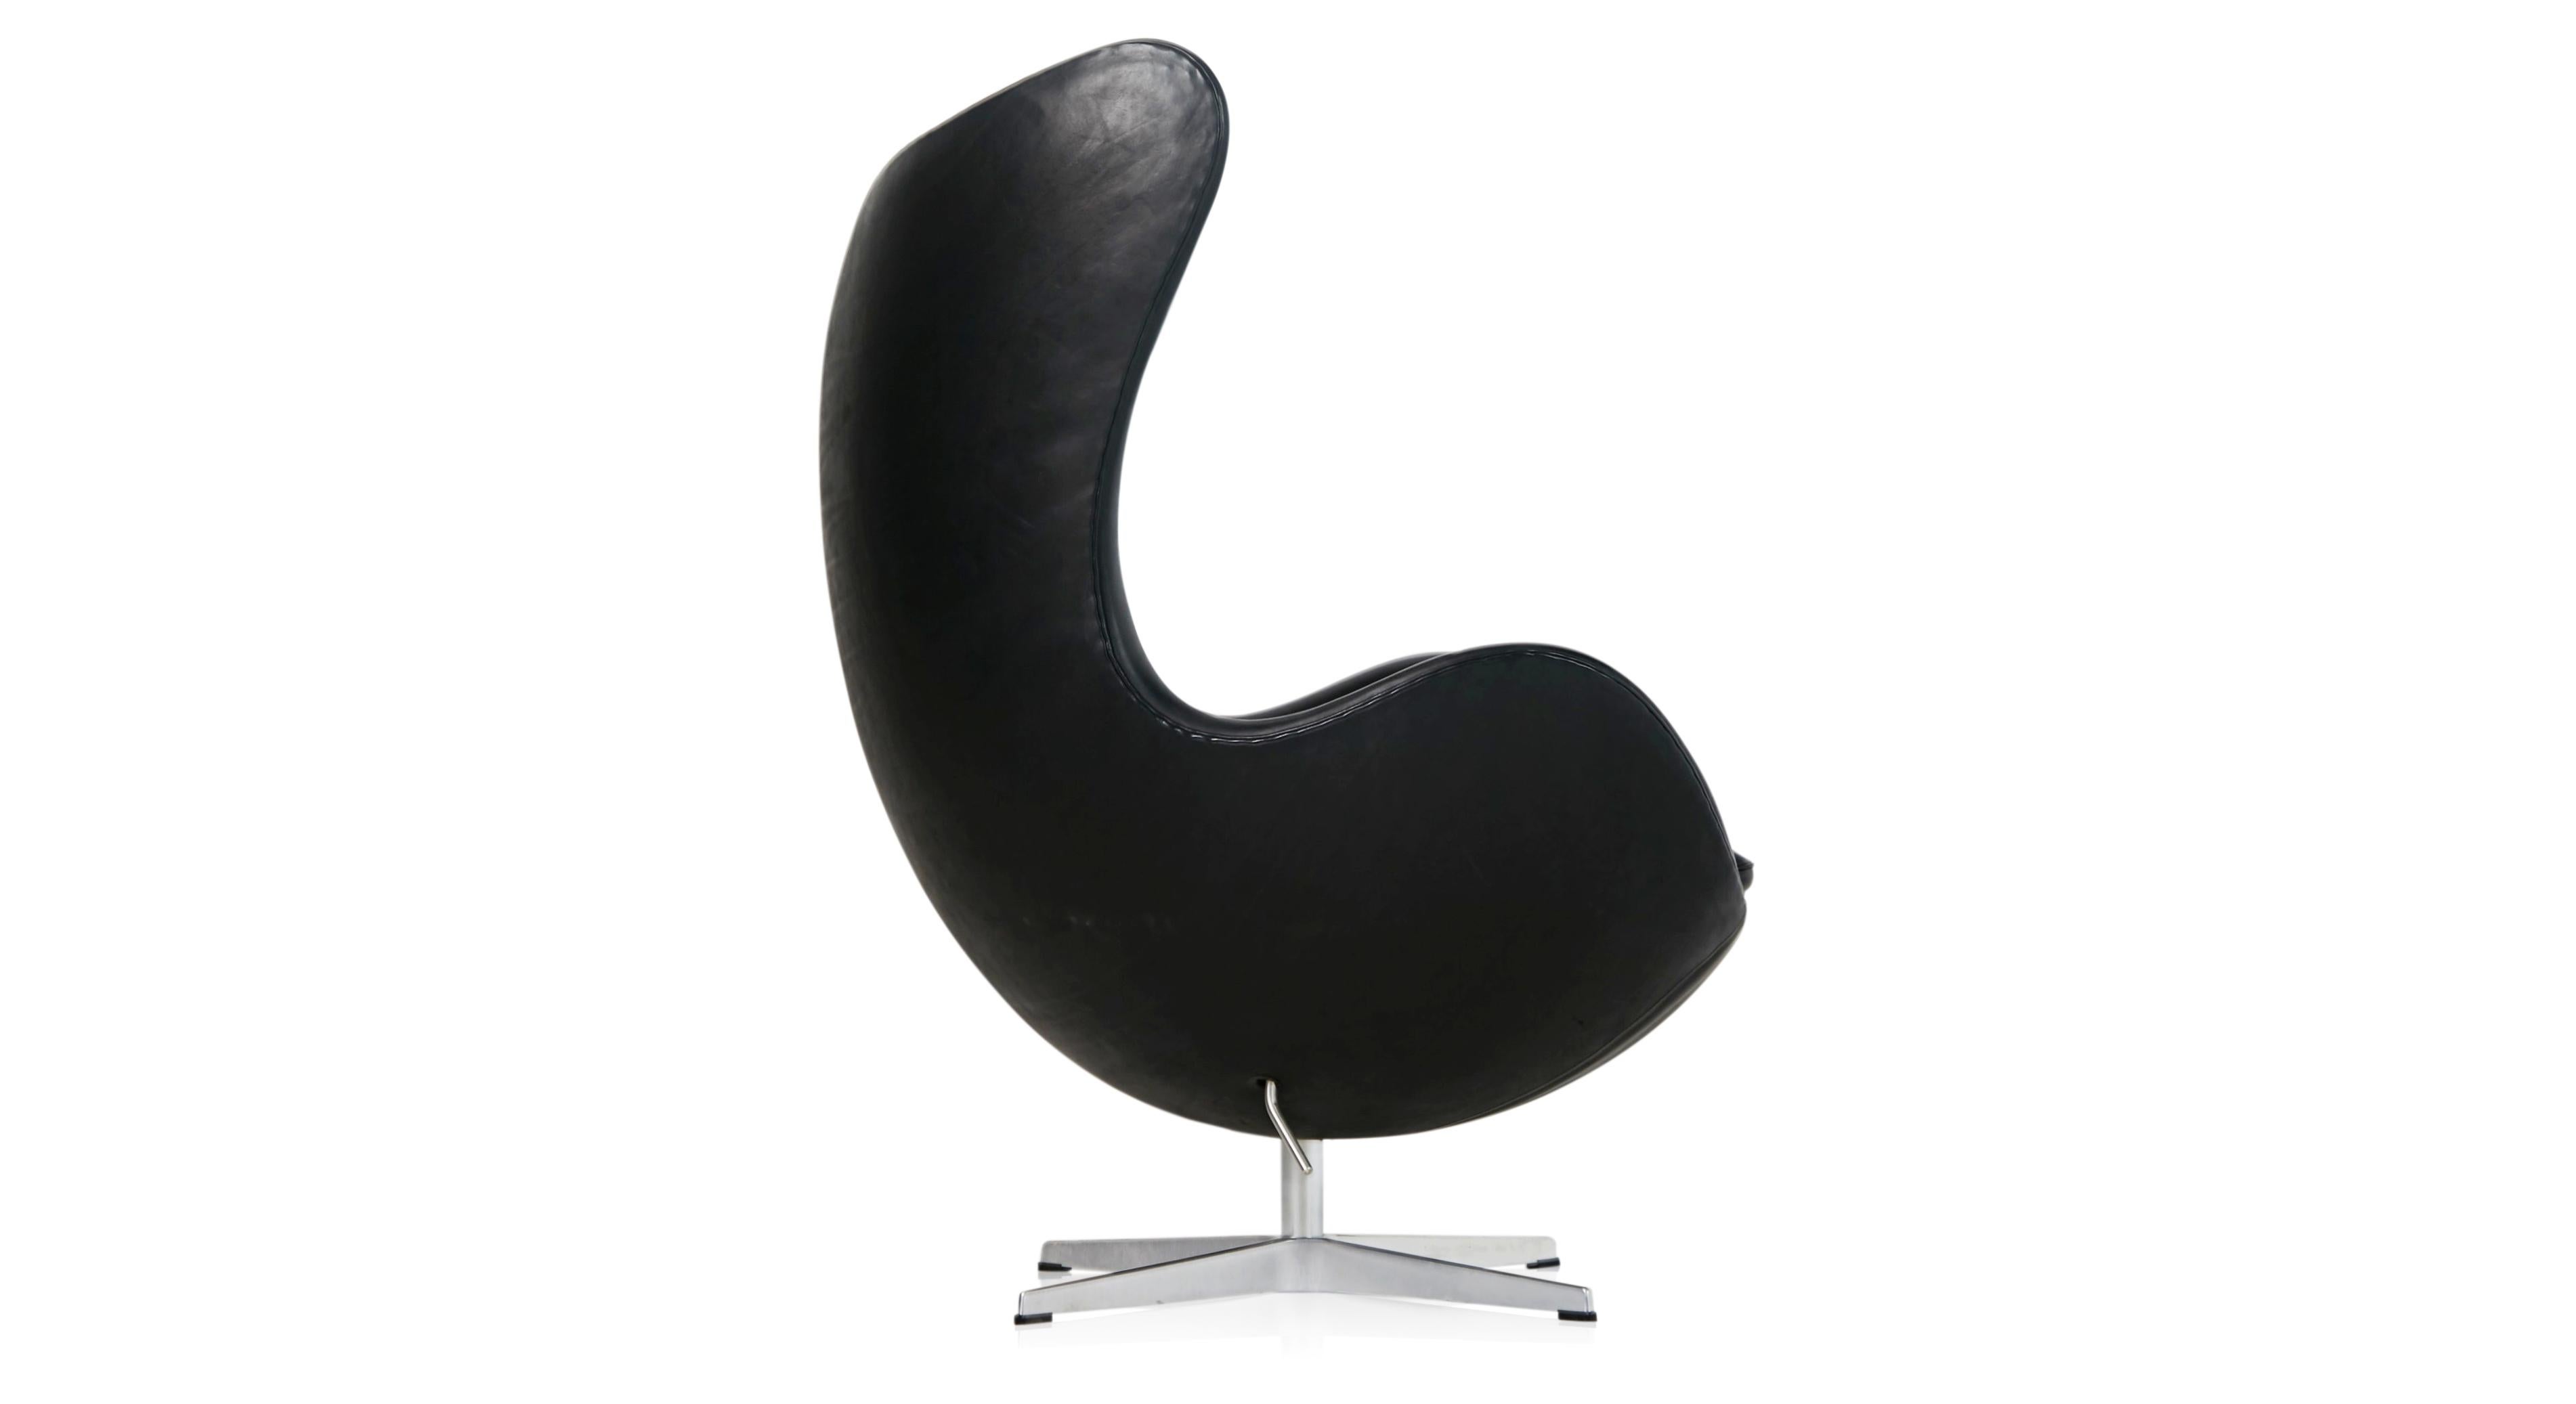 Mid-Century Modern Egg Chair by Arne Jacobson for Fritz Hansen in Black Elegance Leather with Tilt